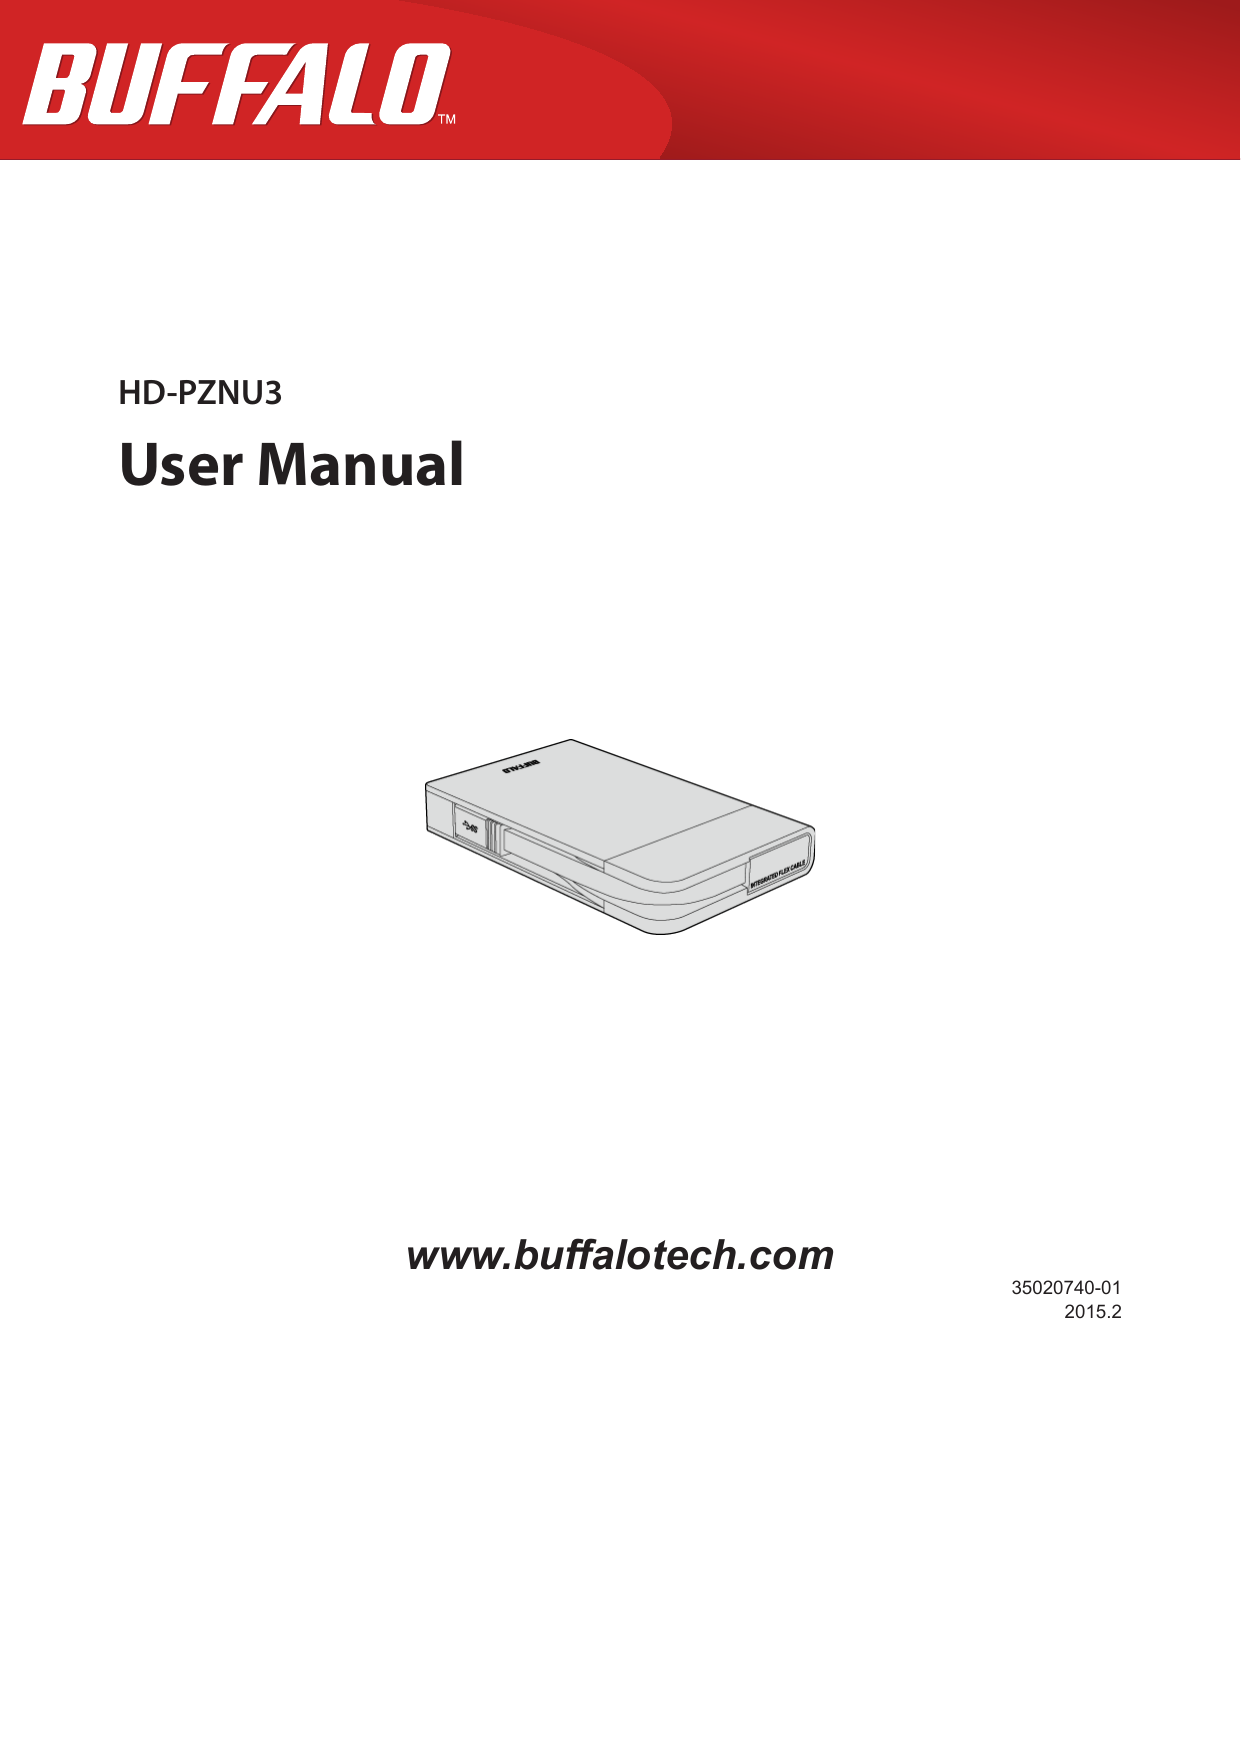 HD-PZNU3User Manualwww.buffalotech.com35020740-012015.2